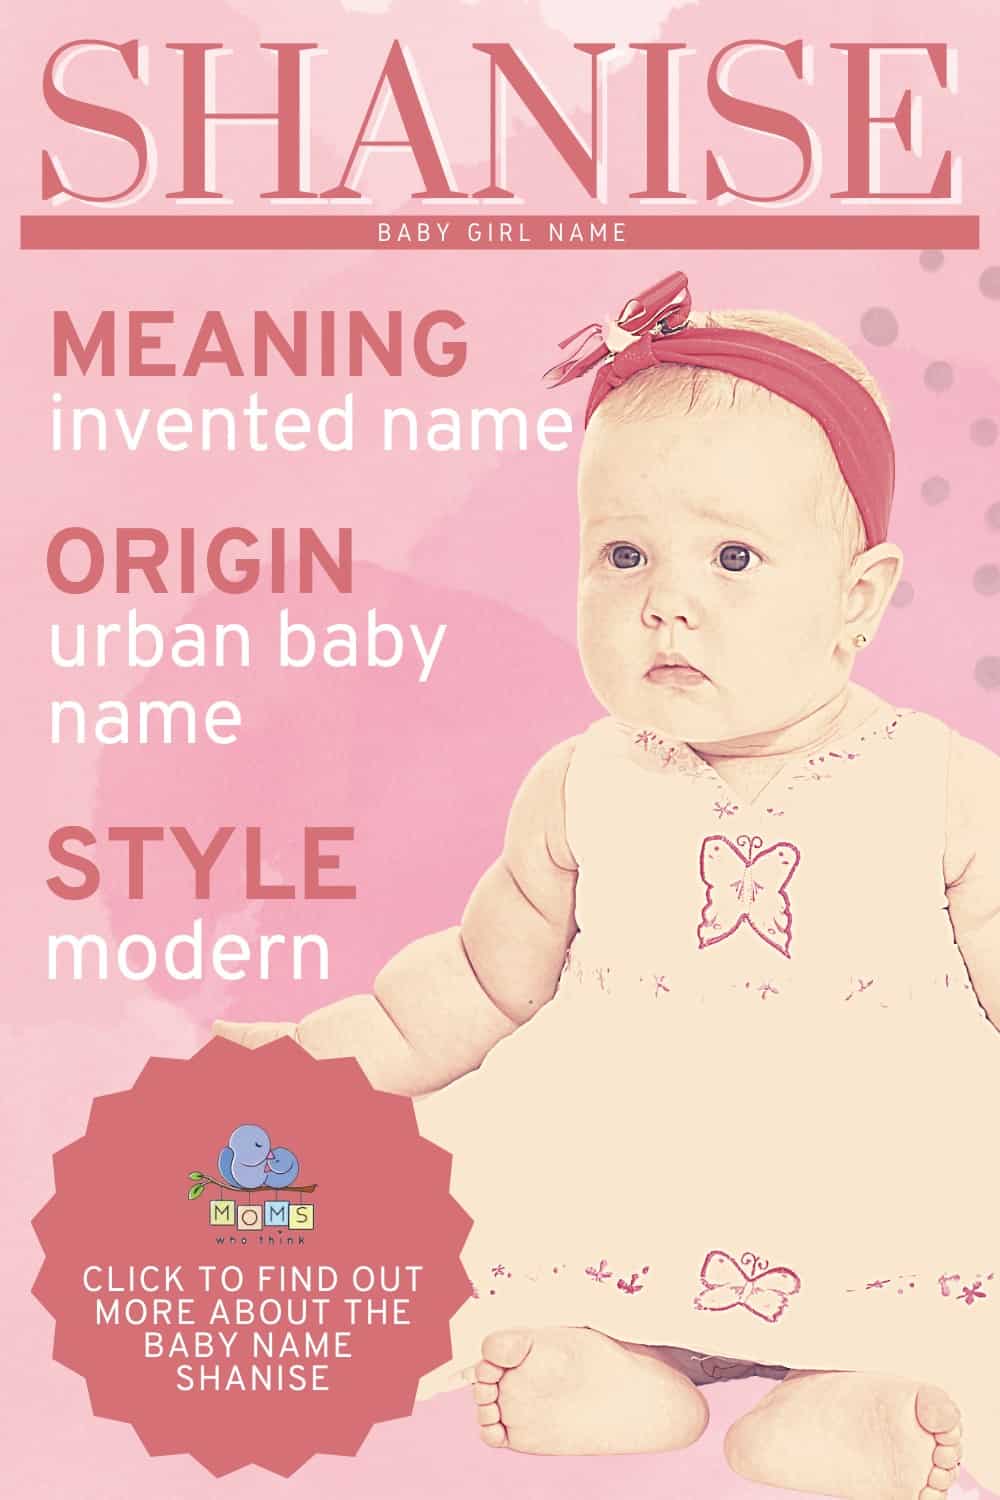 Baby name Shanise